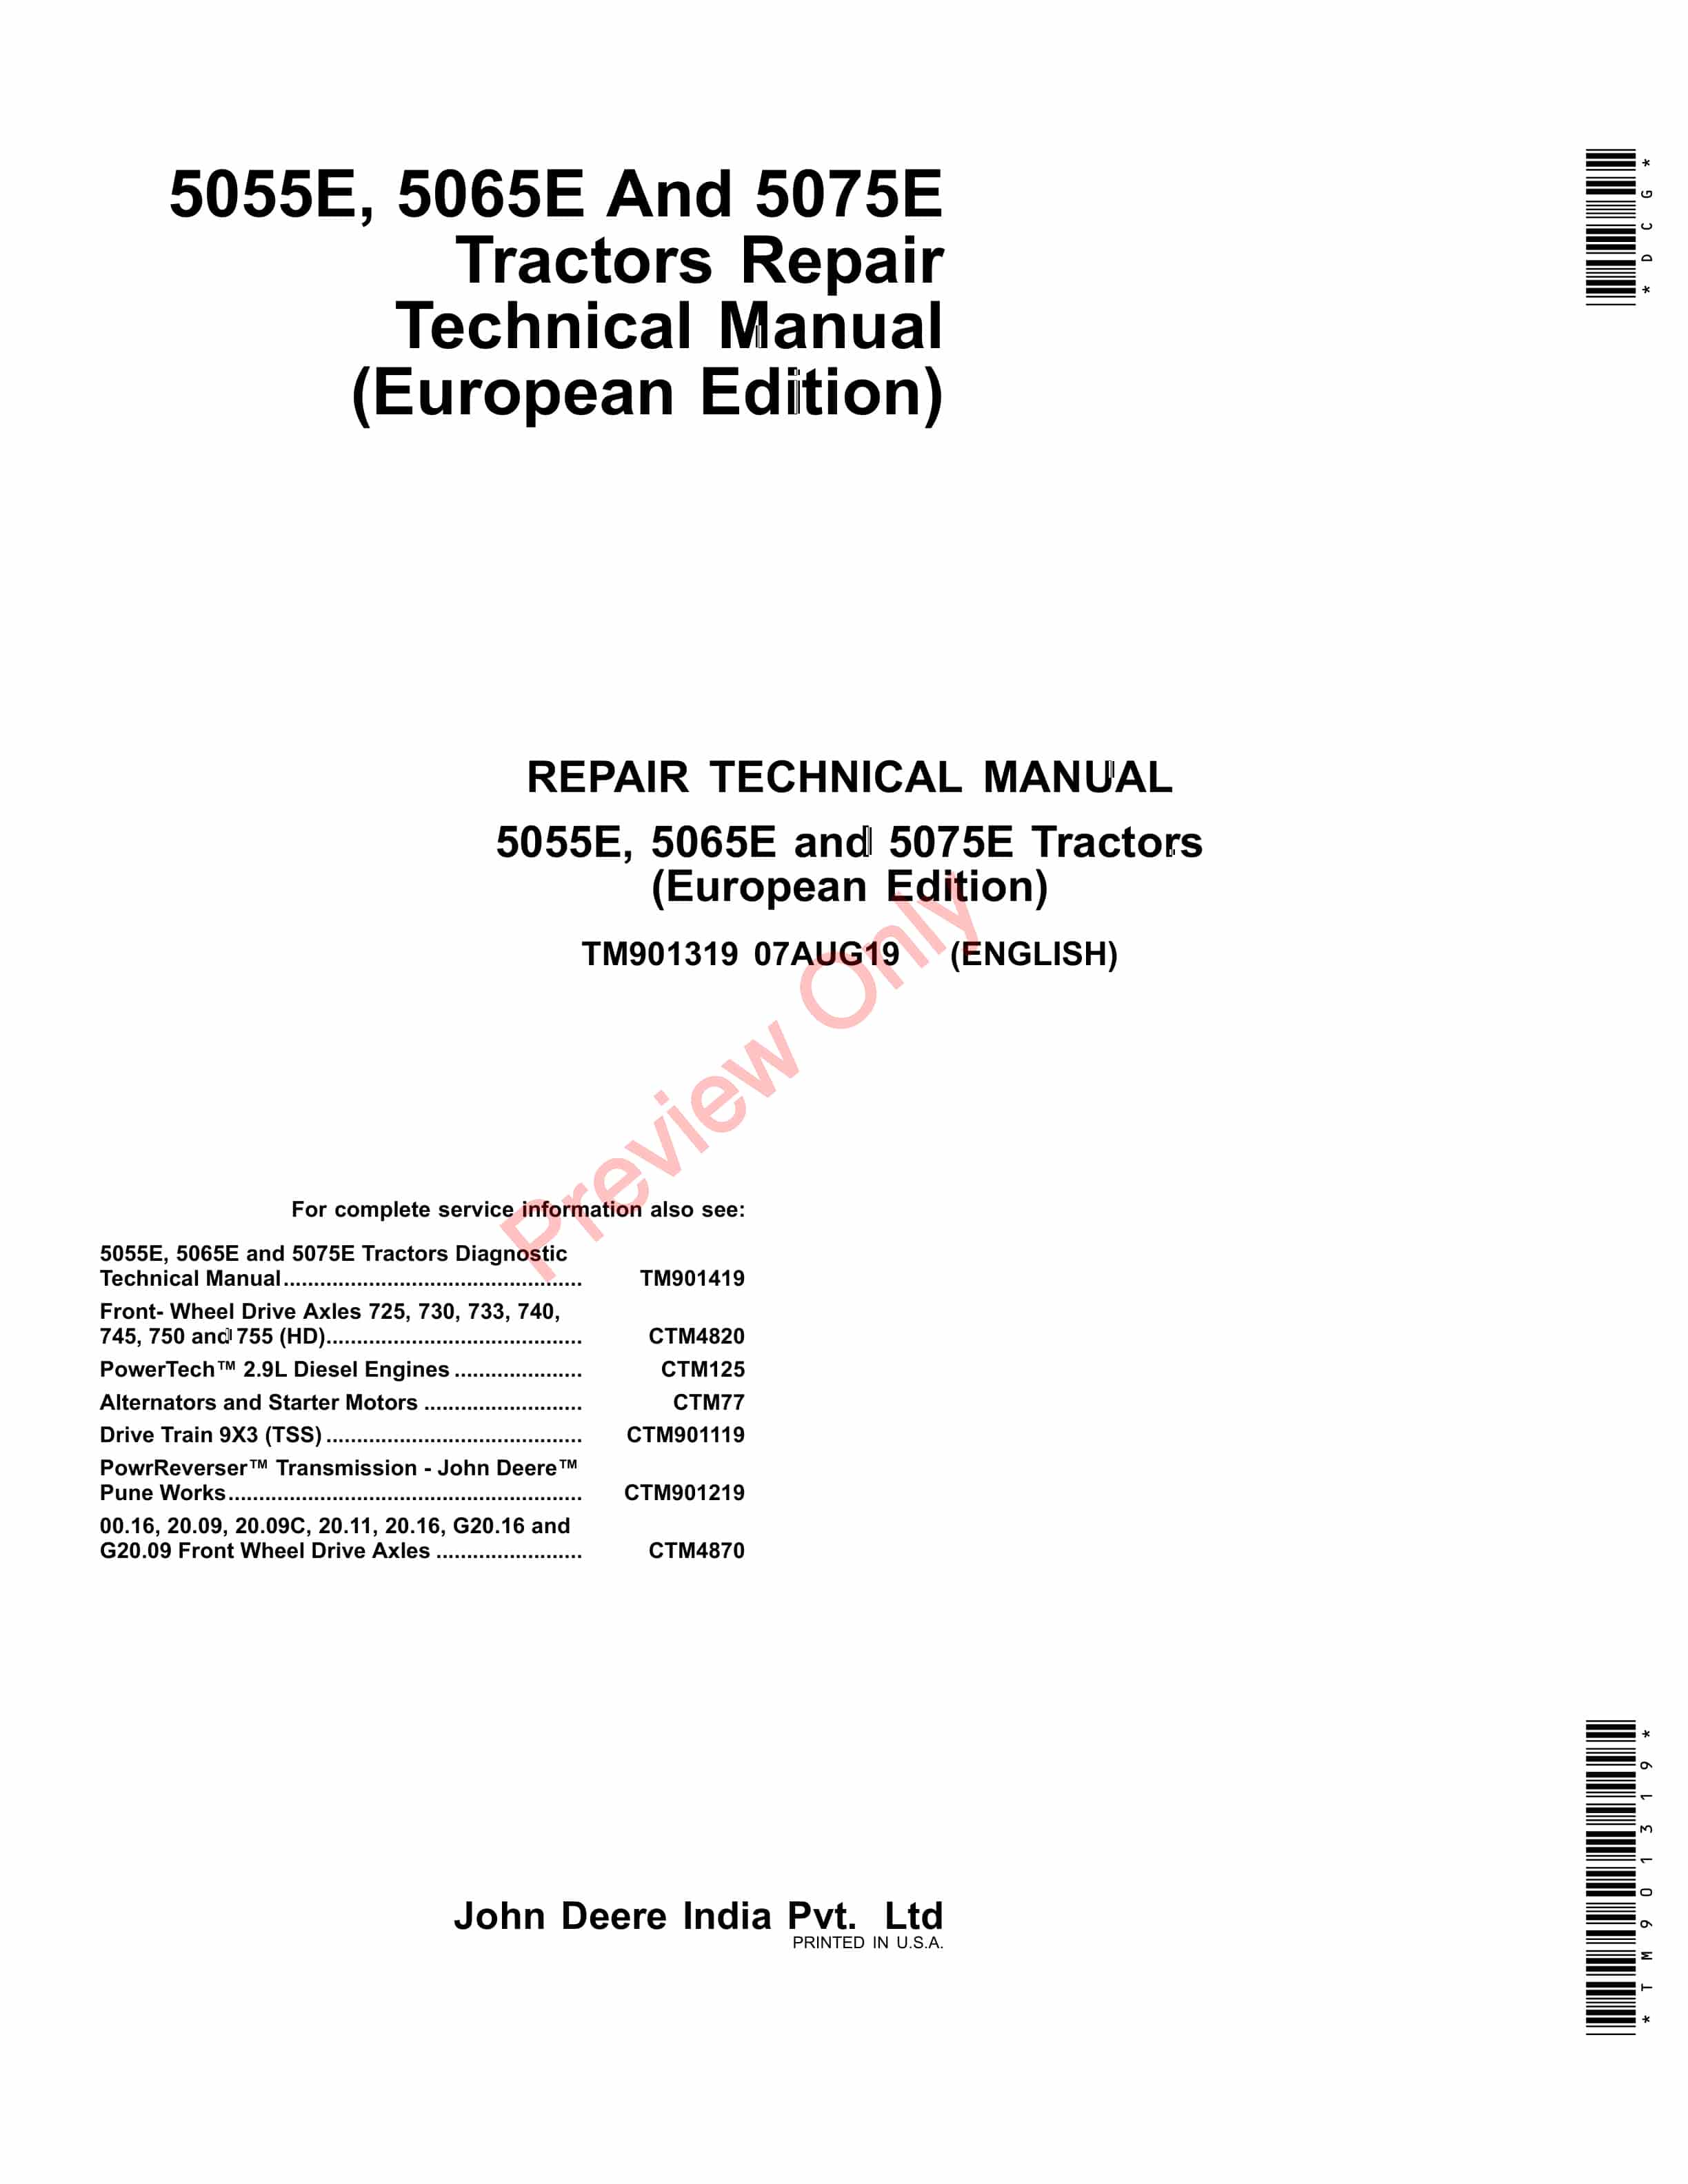 John Deere 5055E 5065E and 5075E Tractors Repair Technical Manual TM901319 07AUG19 1